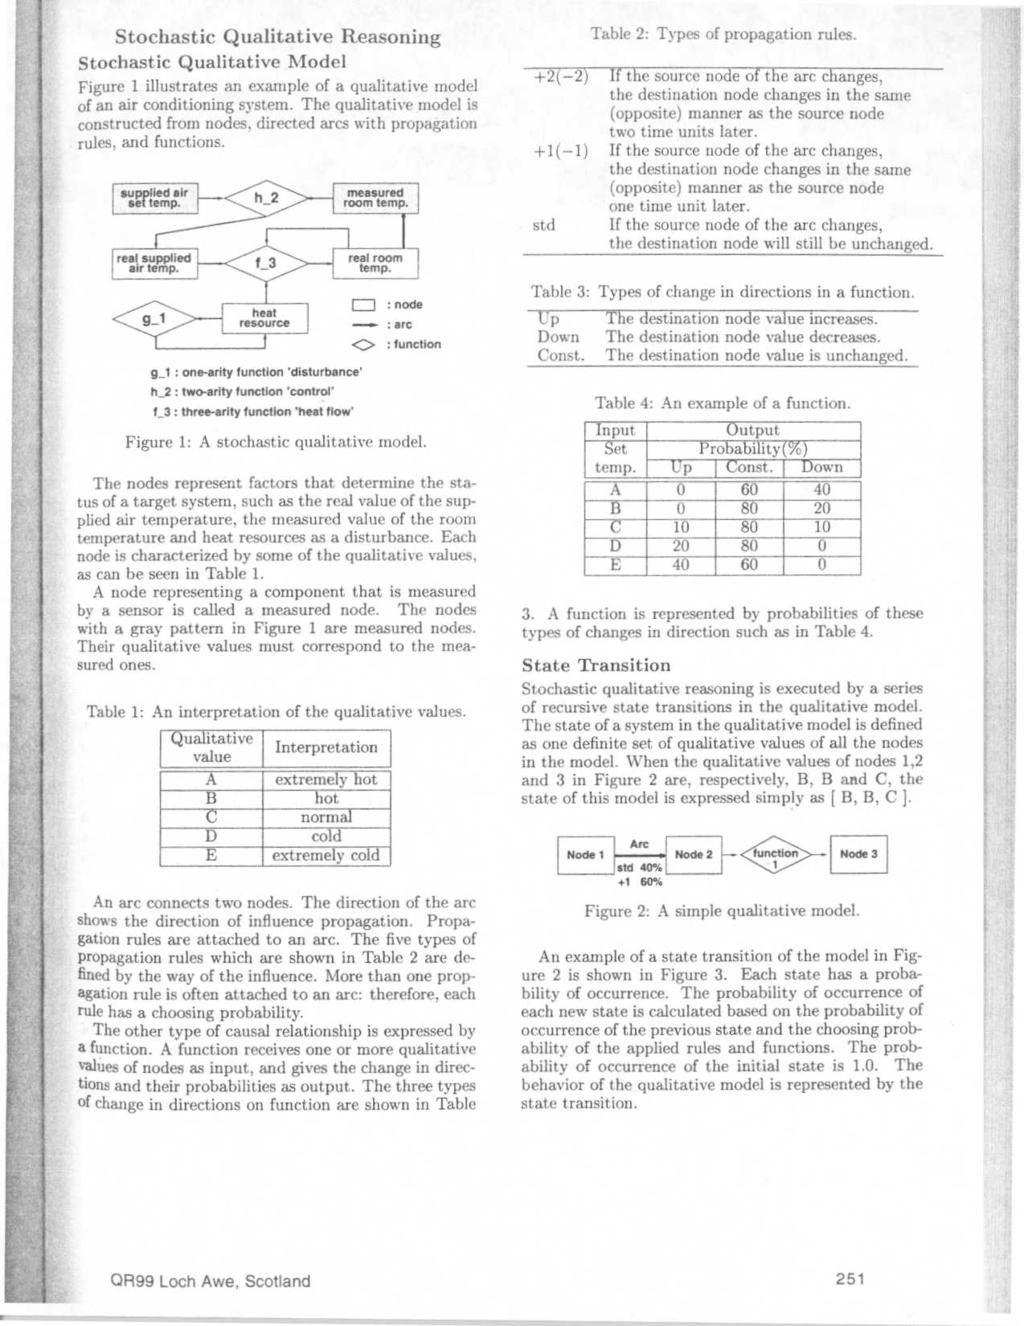 Stochastic Qualitative Reasoning Stochastic Qualitative Model Figure 1 illustrates an example of a qualitative model of an air conditioning system.